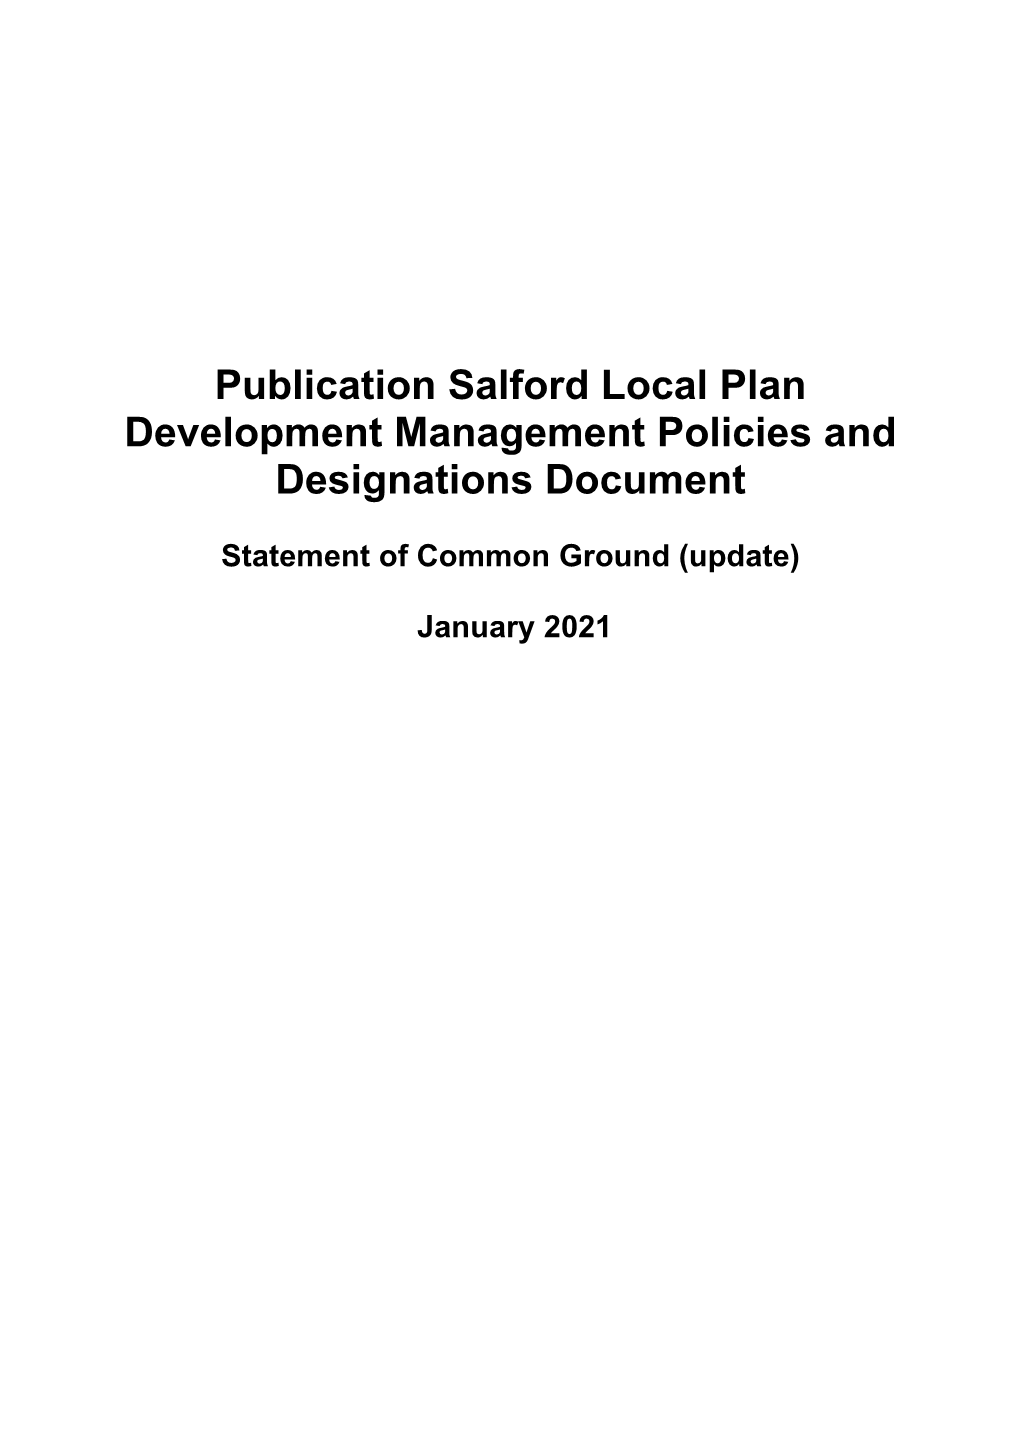 Publication Salford Local Plan Development Management Policies and Designations Document